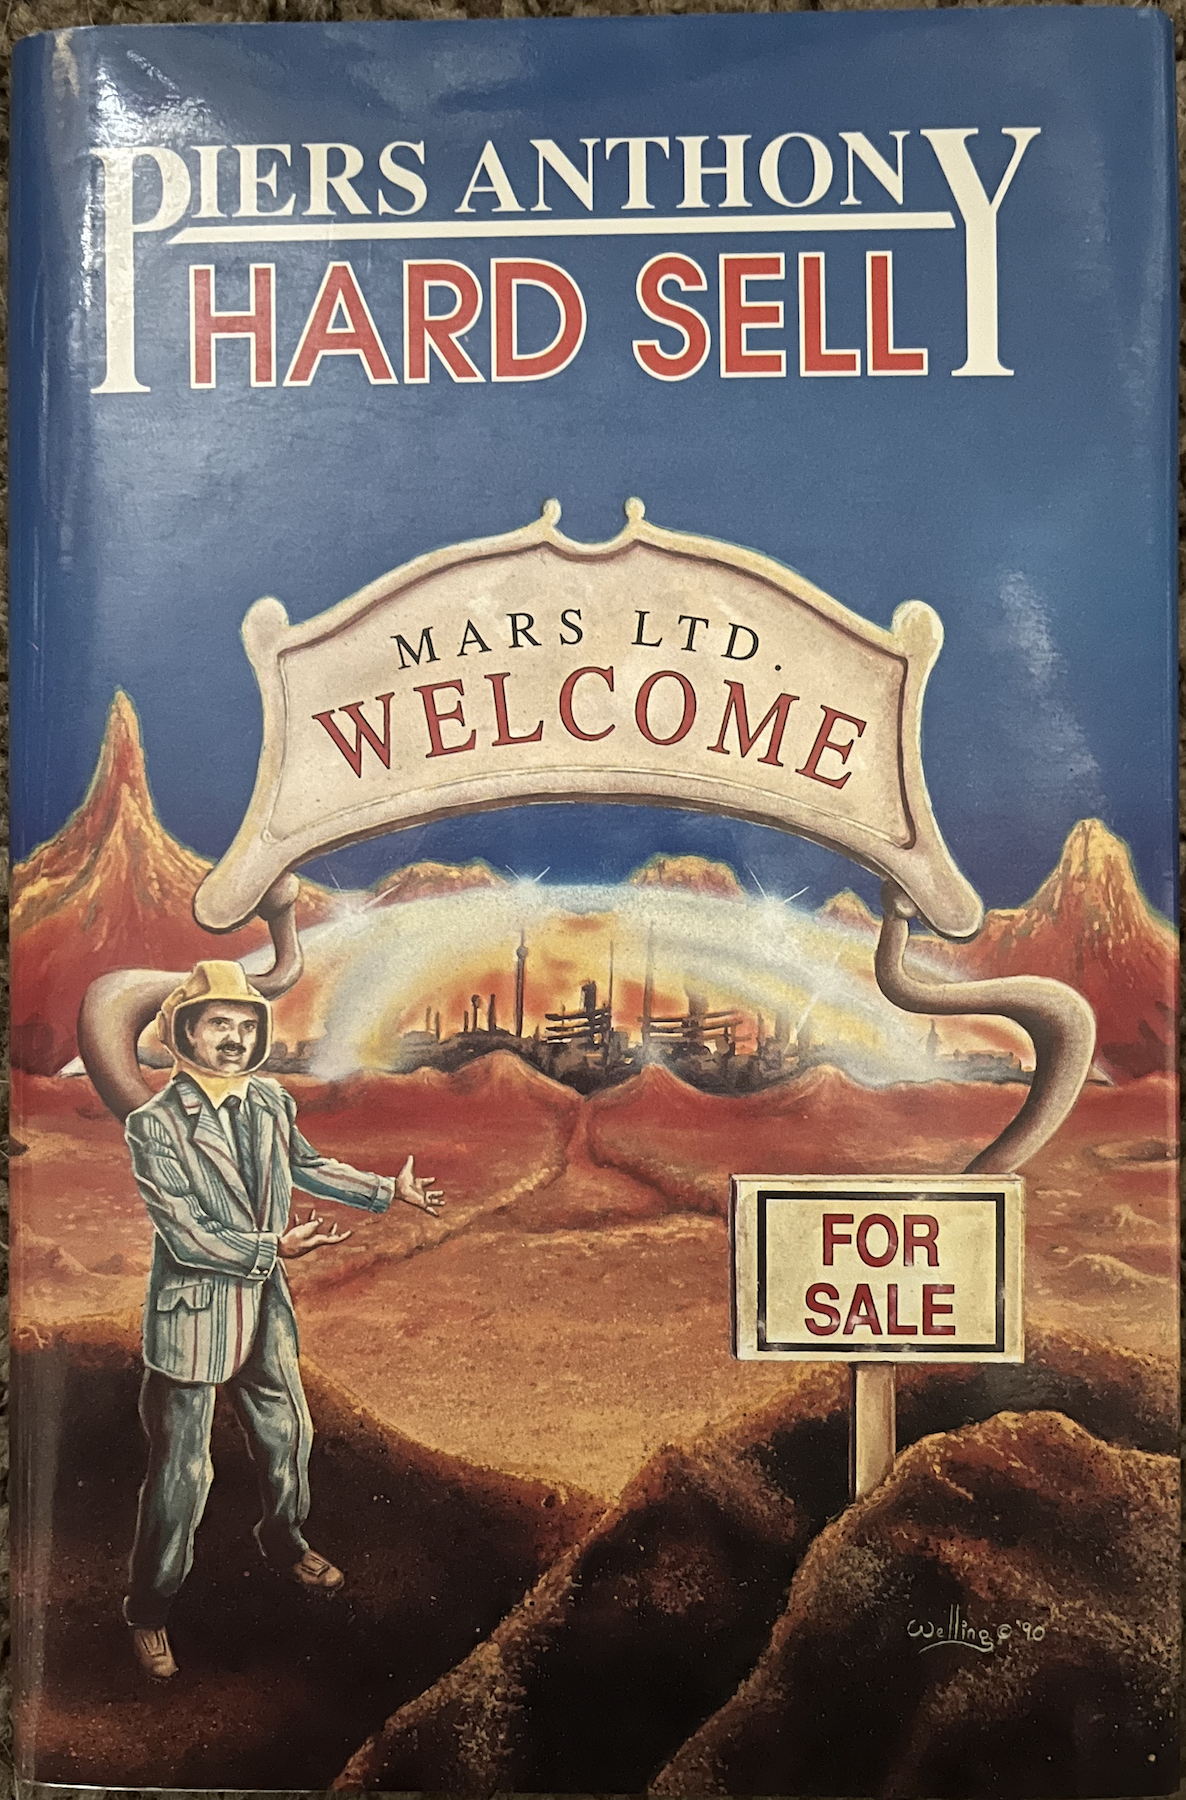 Hard Sell hardback cover